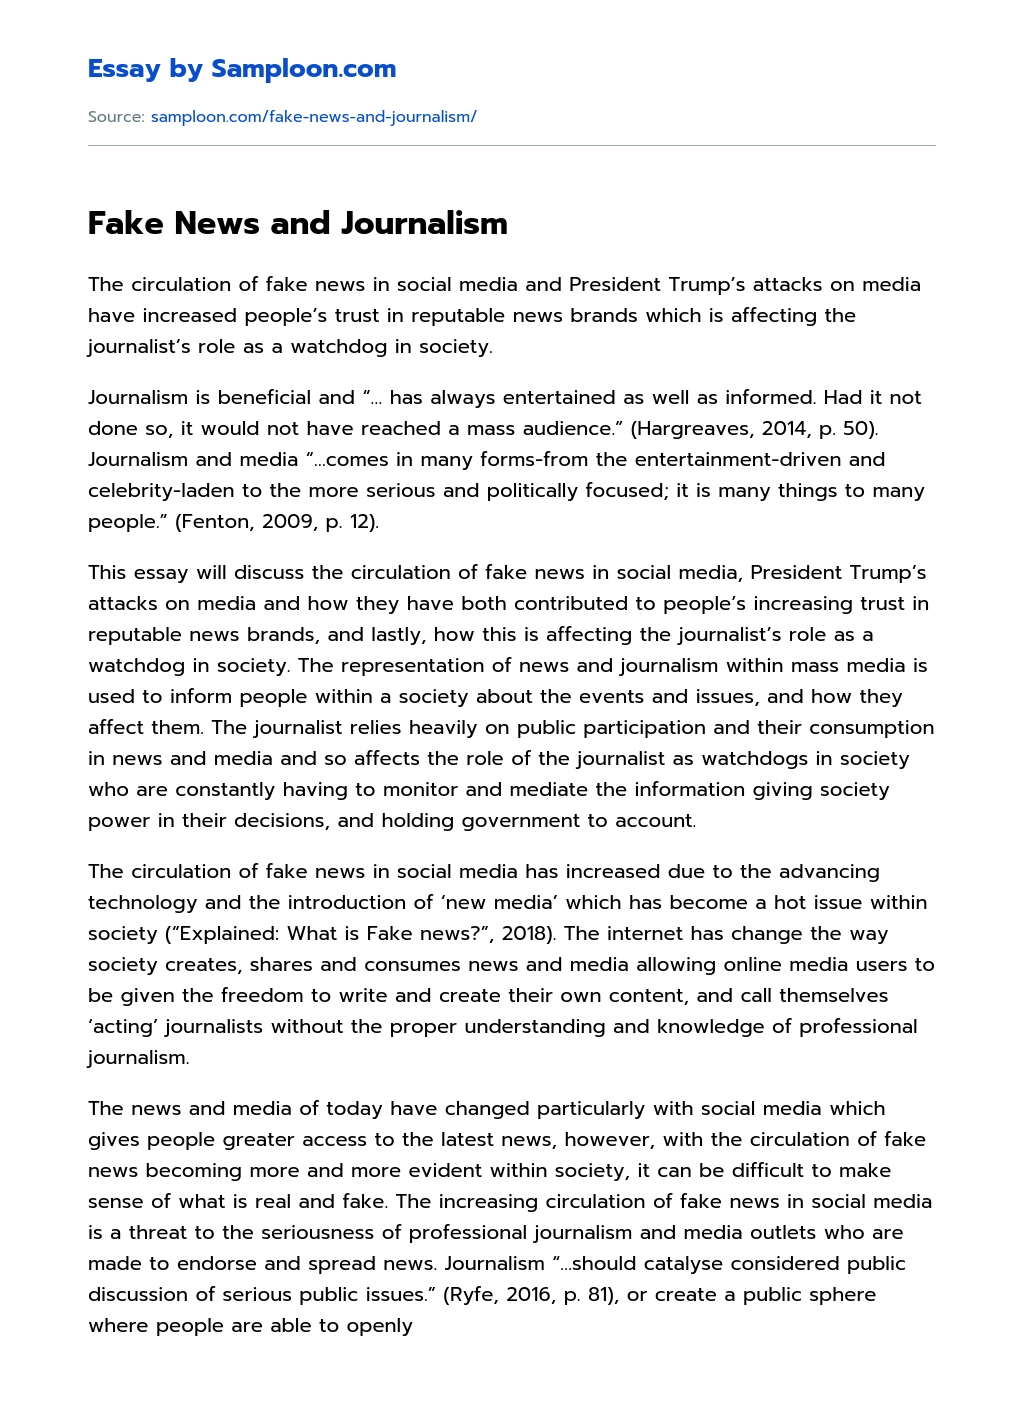 Fake News and Journalism essay